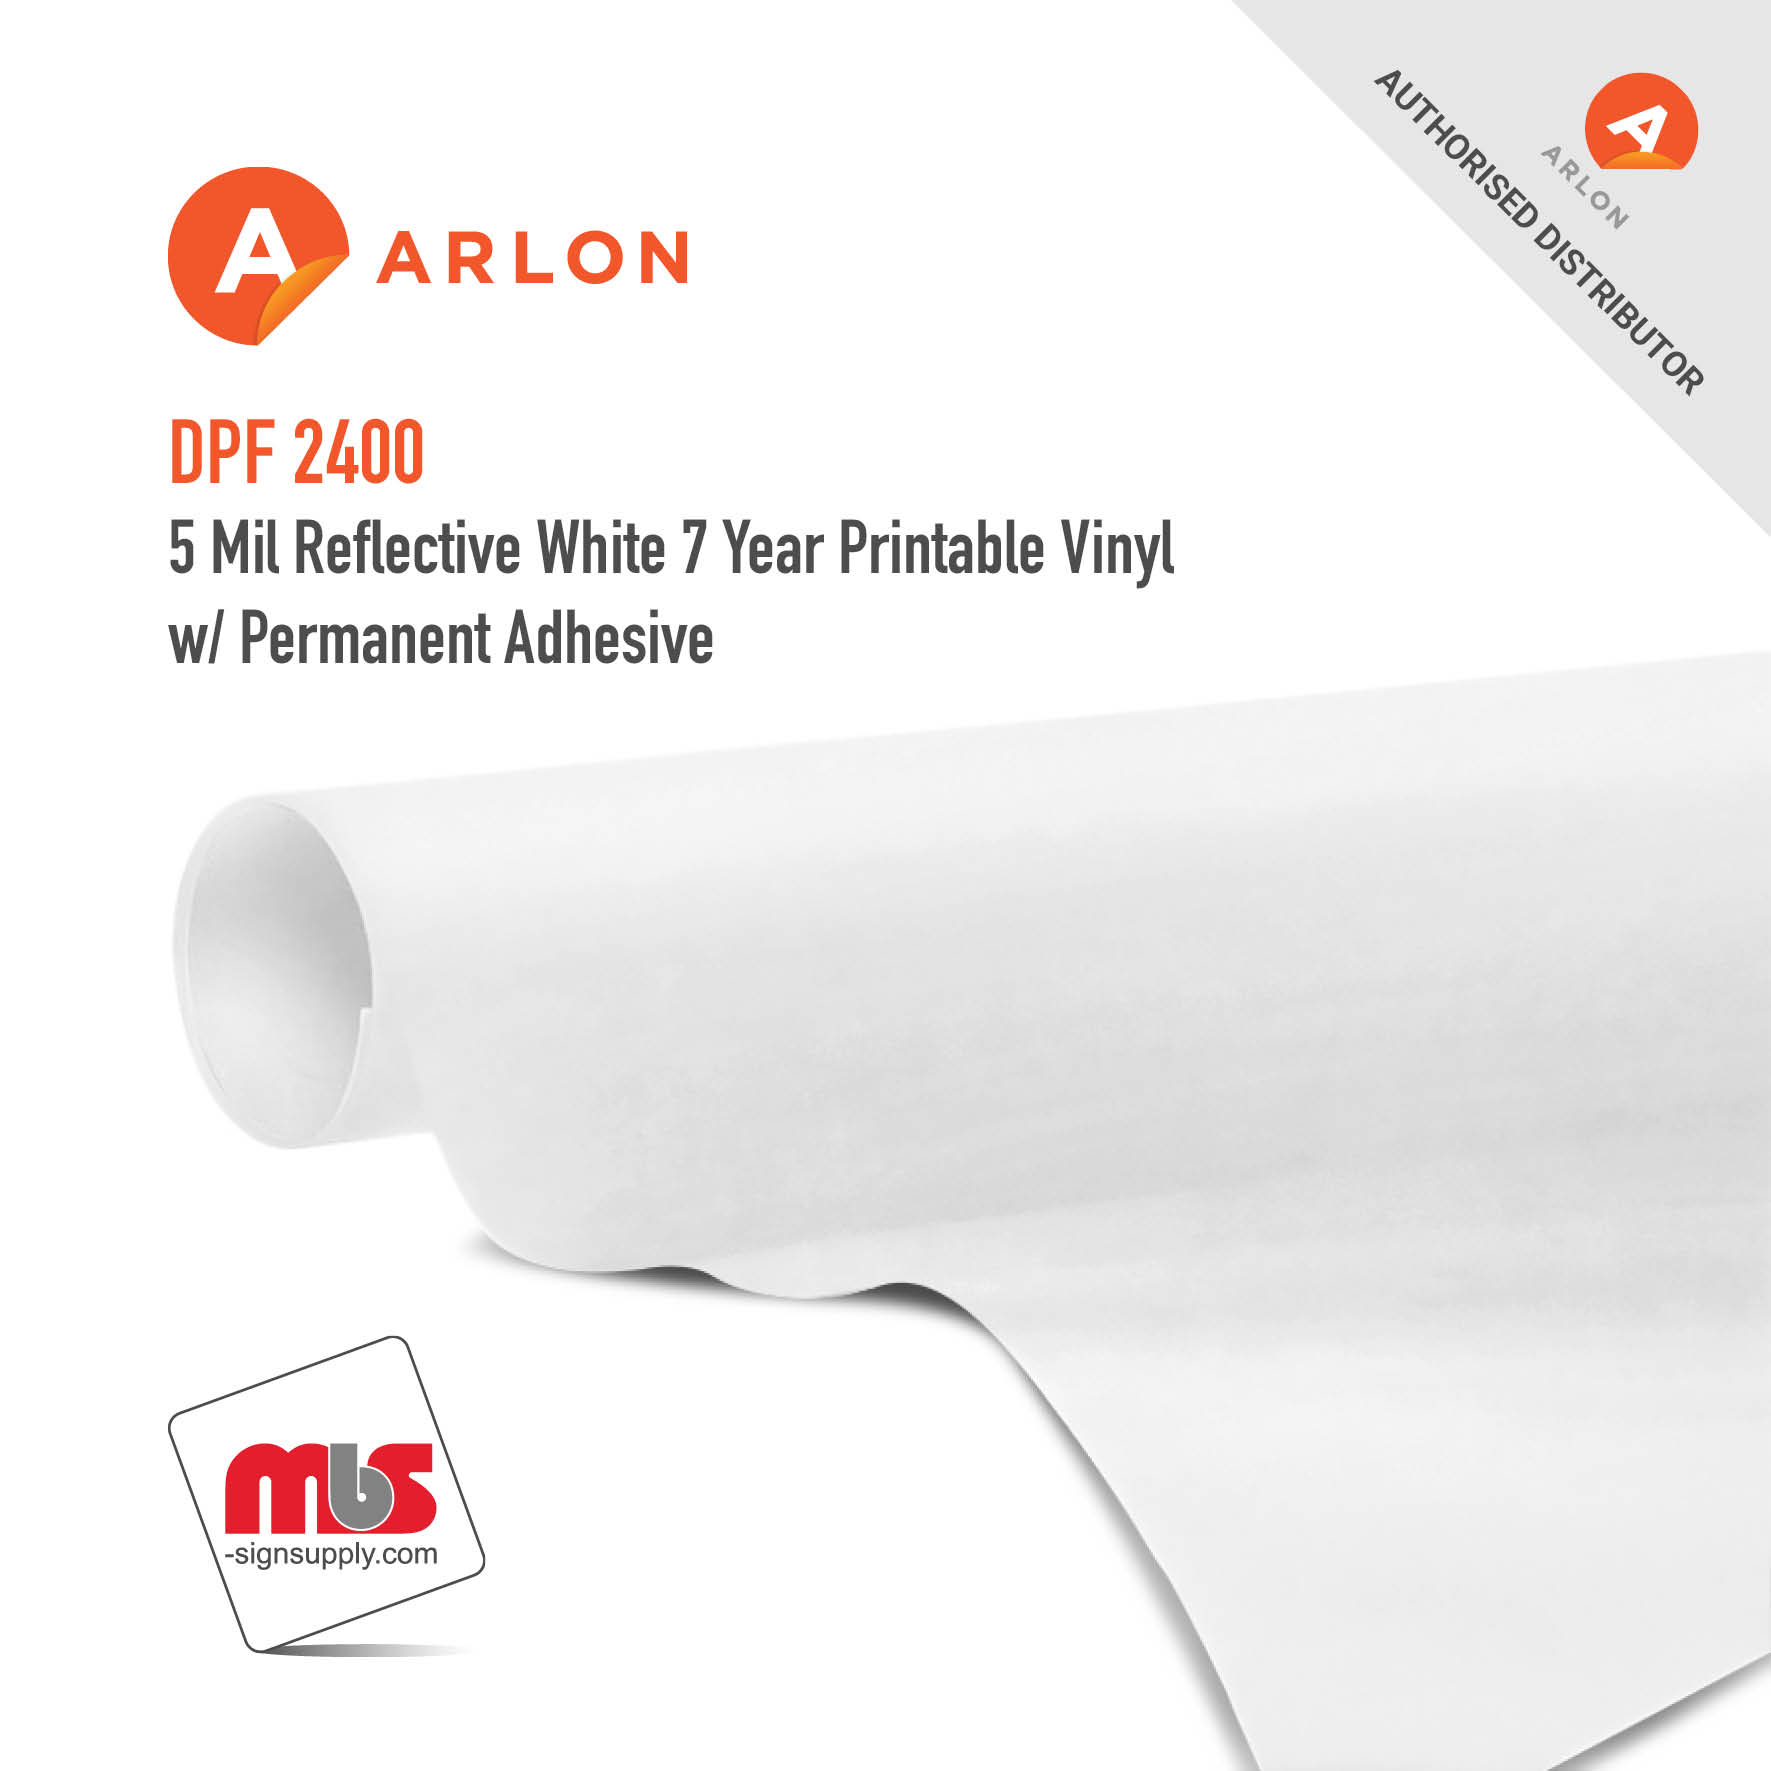 48'' x 25 Yard Roll - Arlon DPF 2400 5 Mil Reflective White 7 Year Printable Vinyl w/ Permanent Adhesive